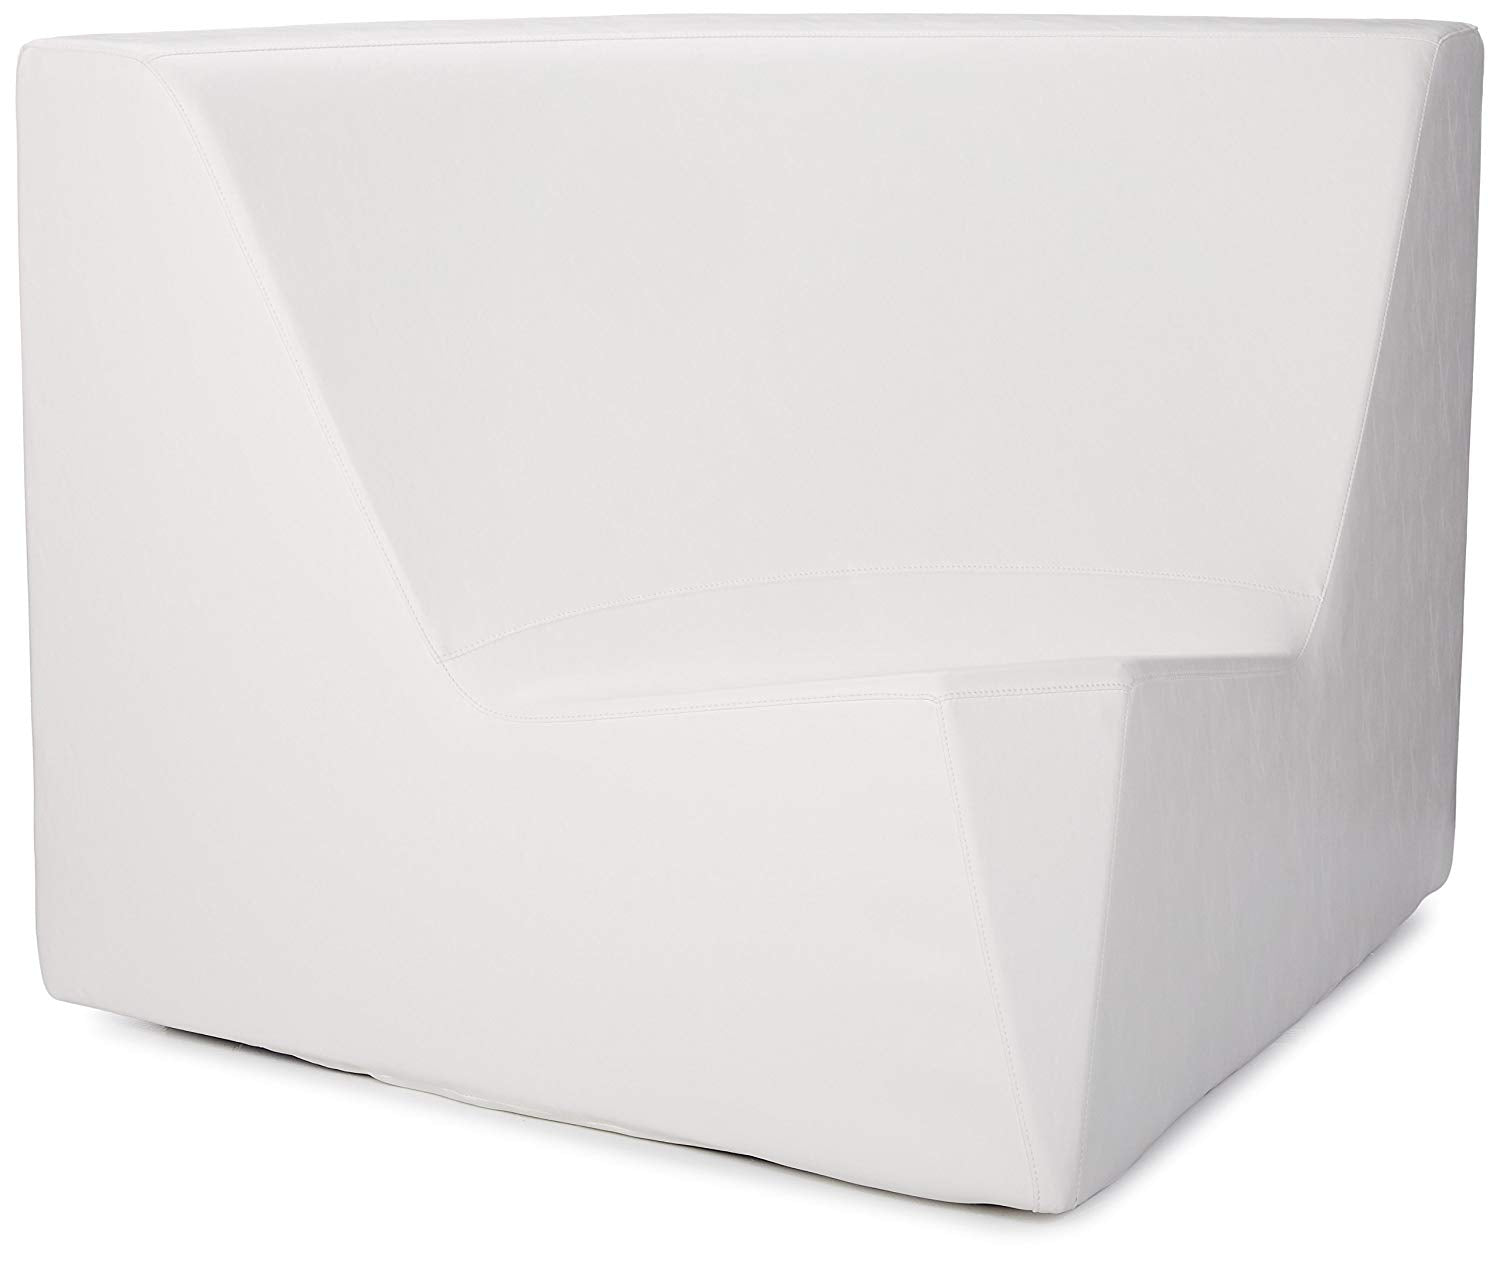 La Fete Design Furniture Goal Corner Module at MetropolitanDecor.com